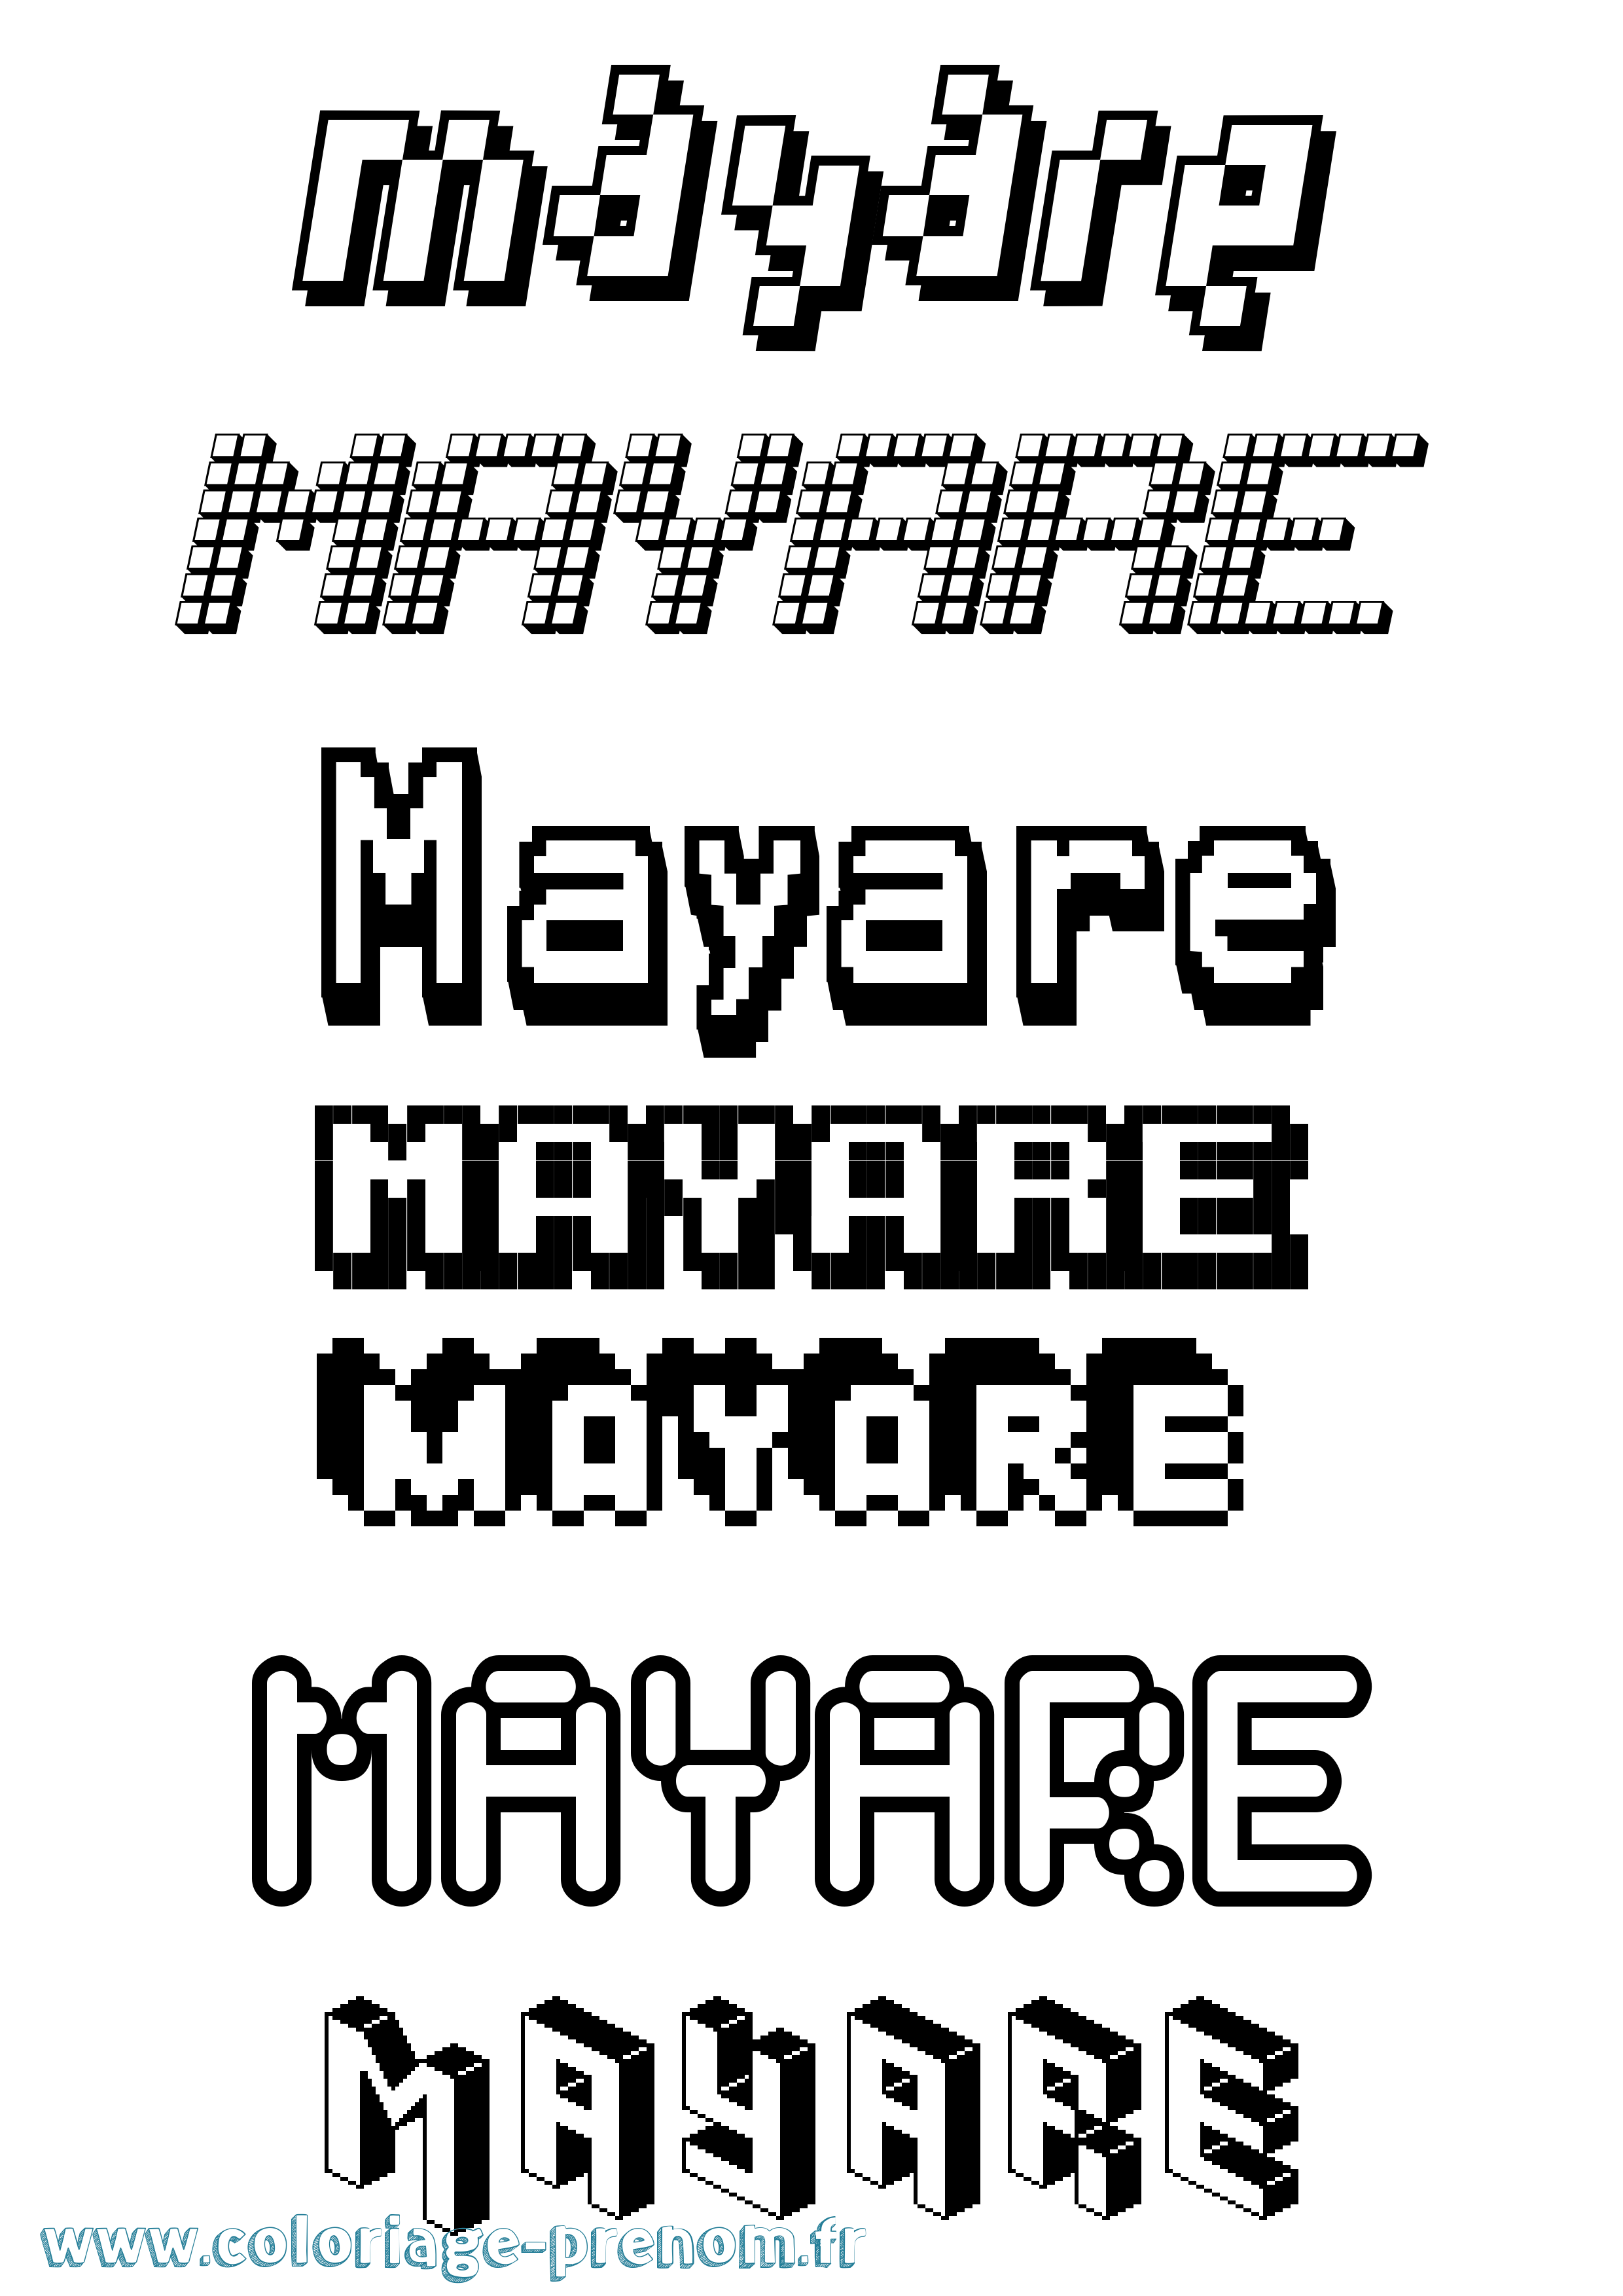 Coloriage prénom Mayare Pixel